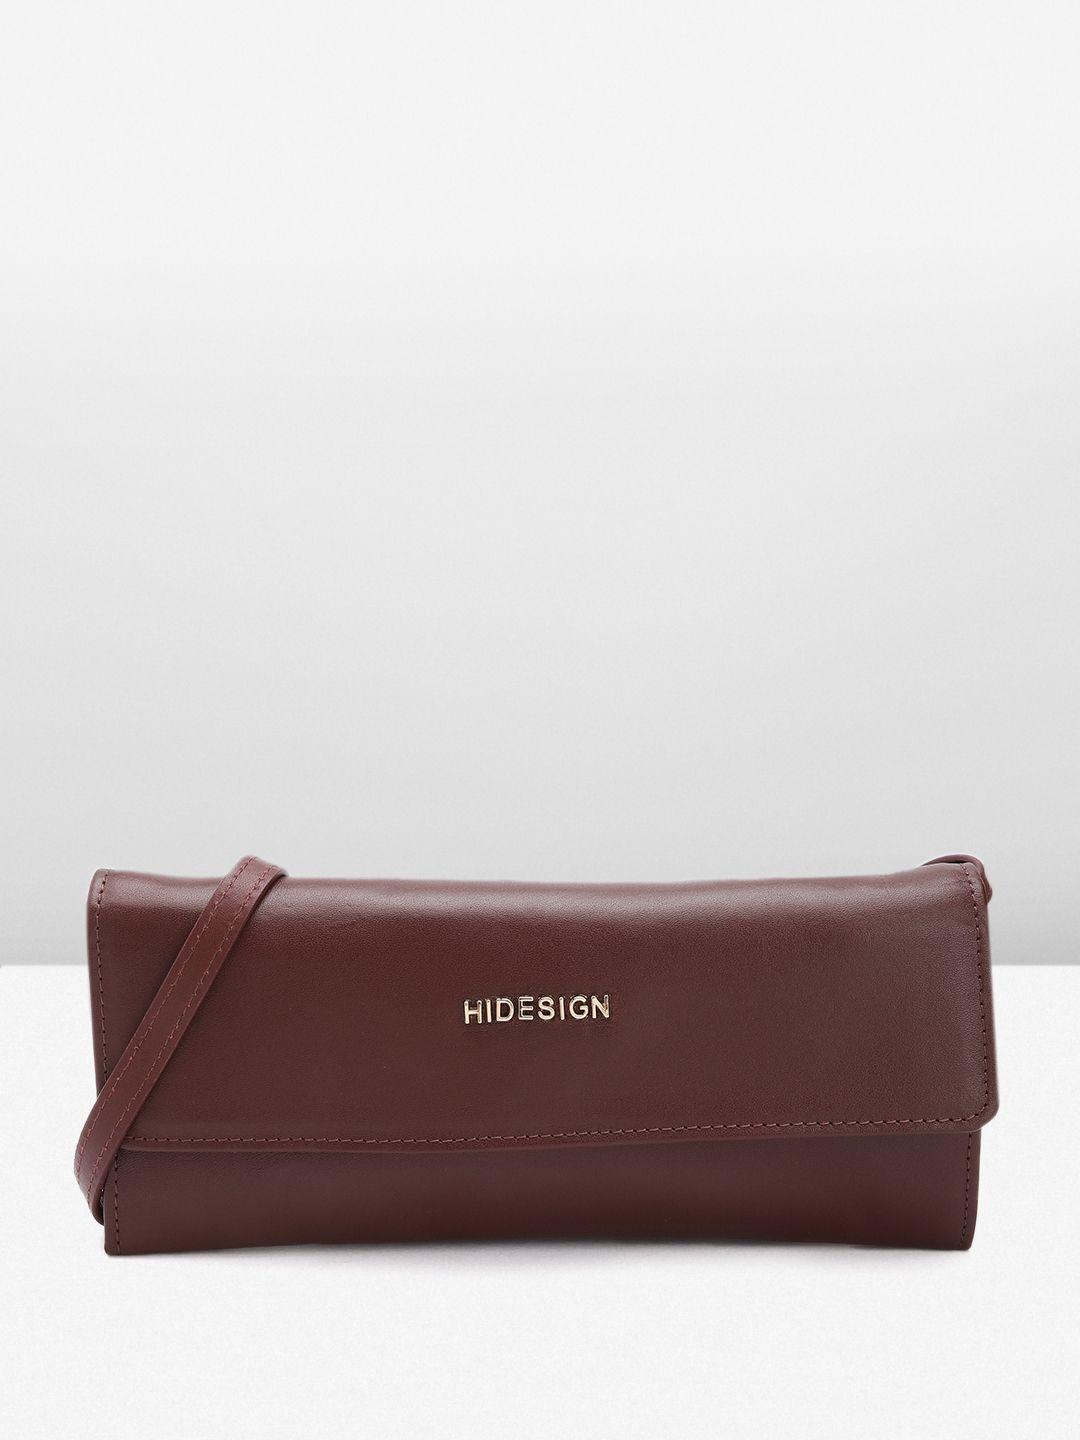 hidesign women leather two fold wallet